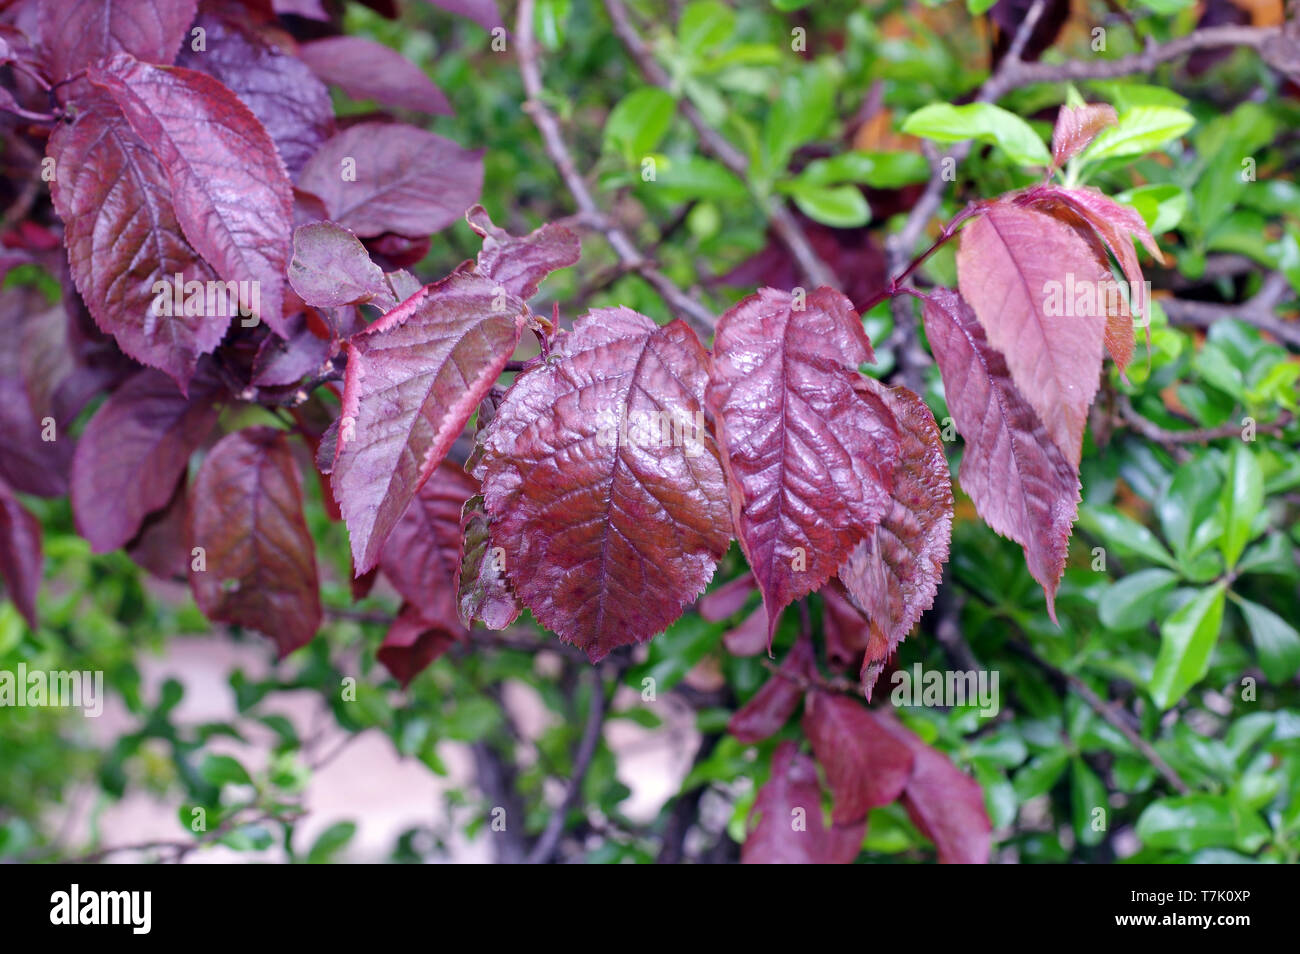 Leaves of prunus cerasifera pissardii close-up Stock Photo